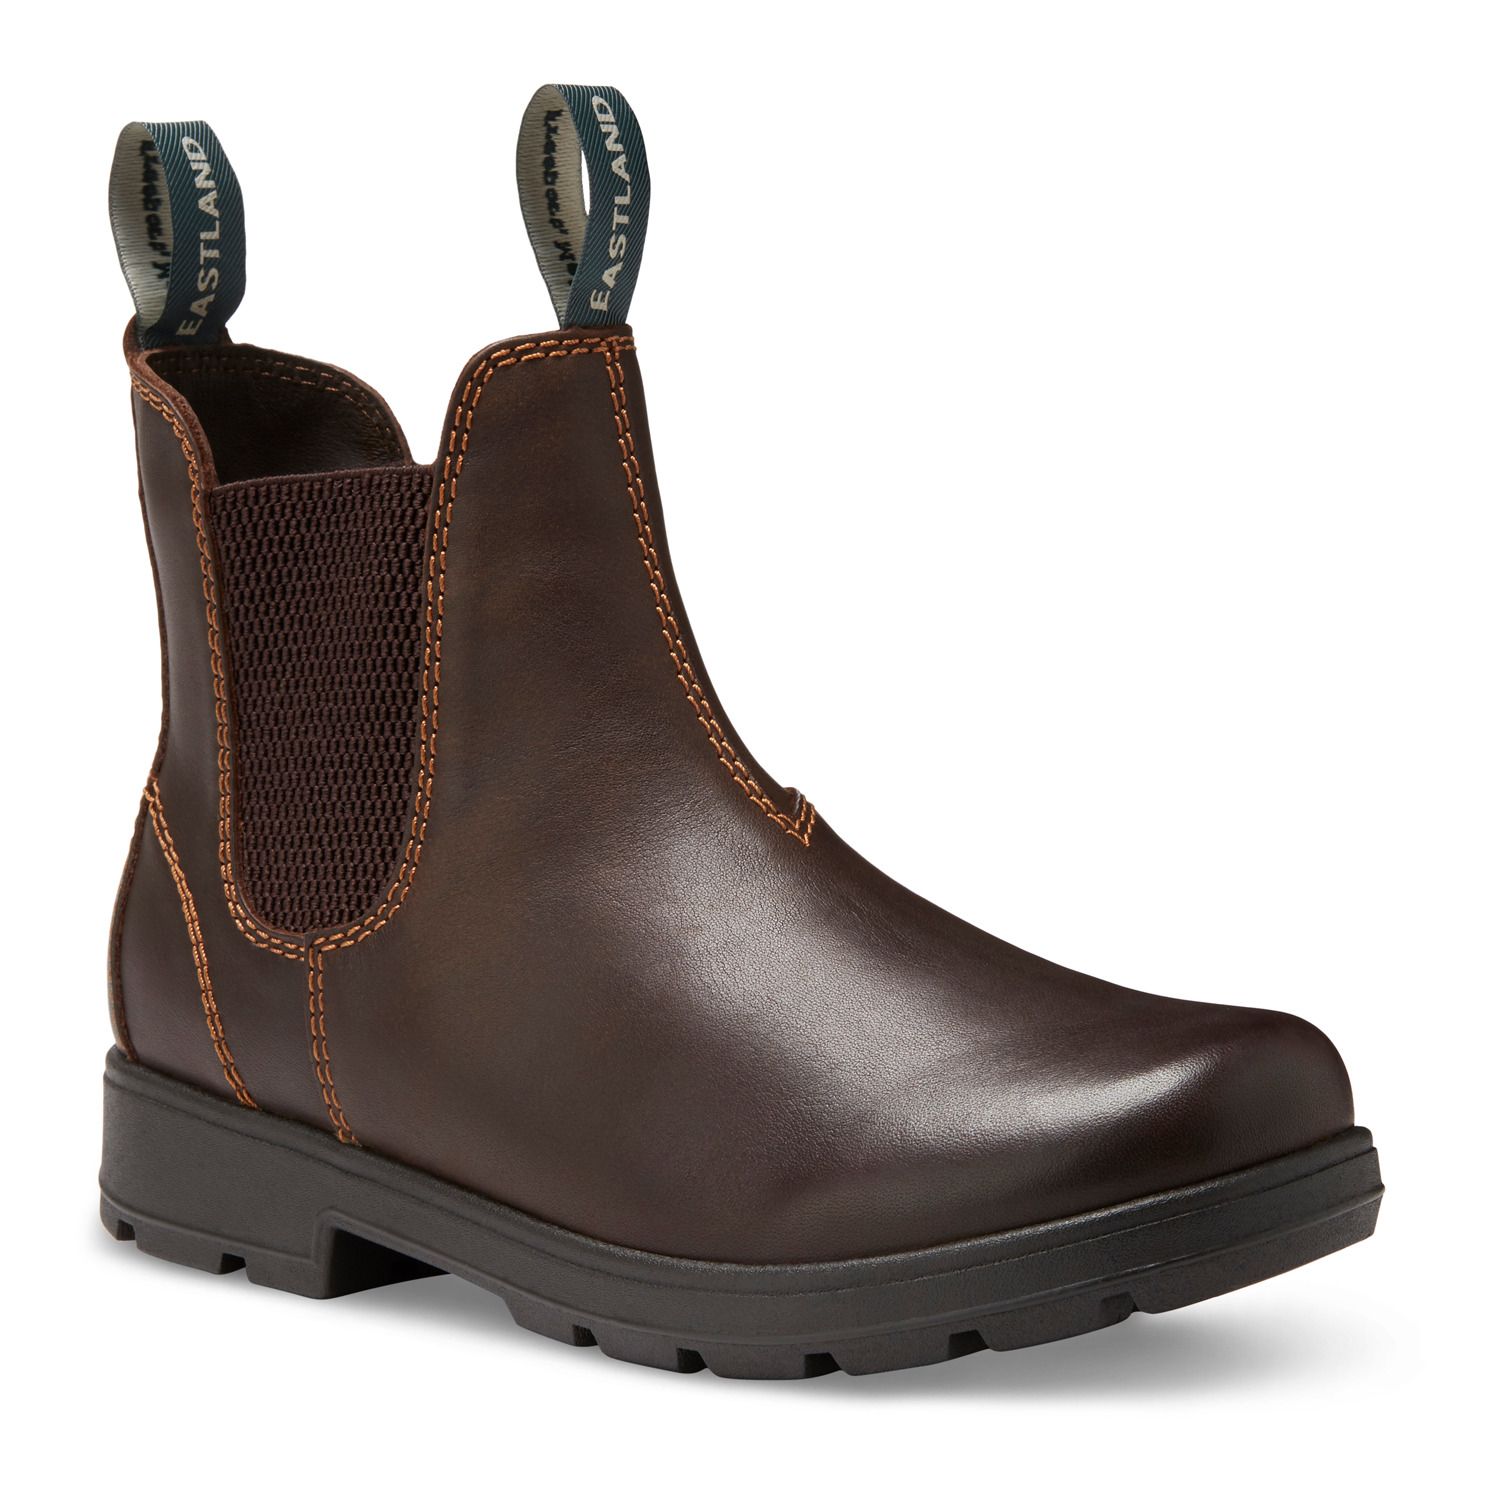 eastland boots waterproof